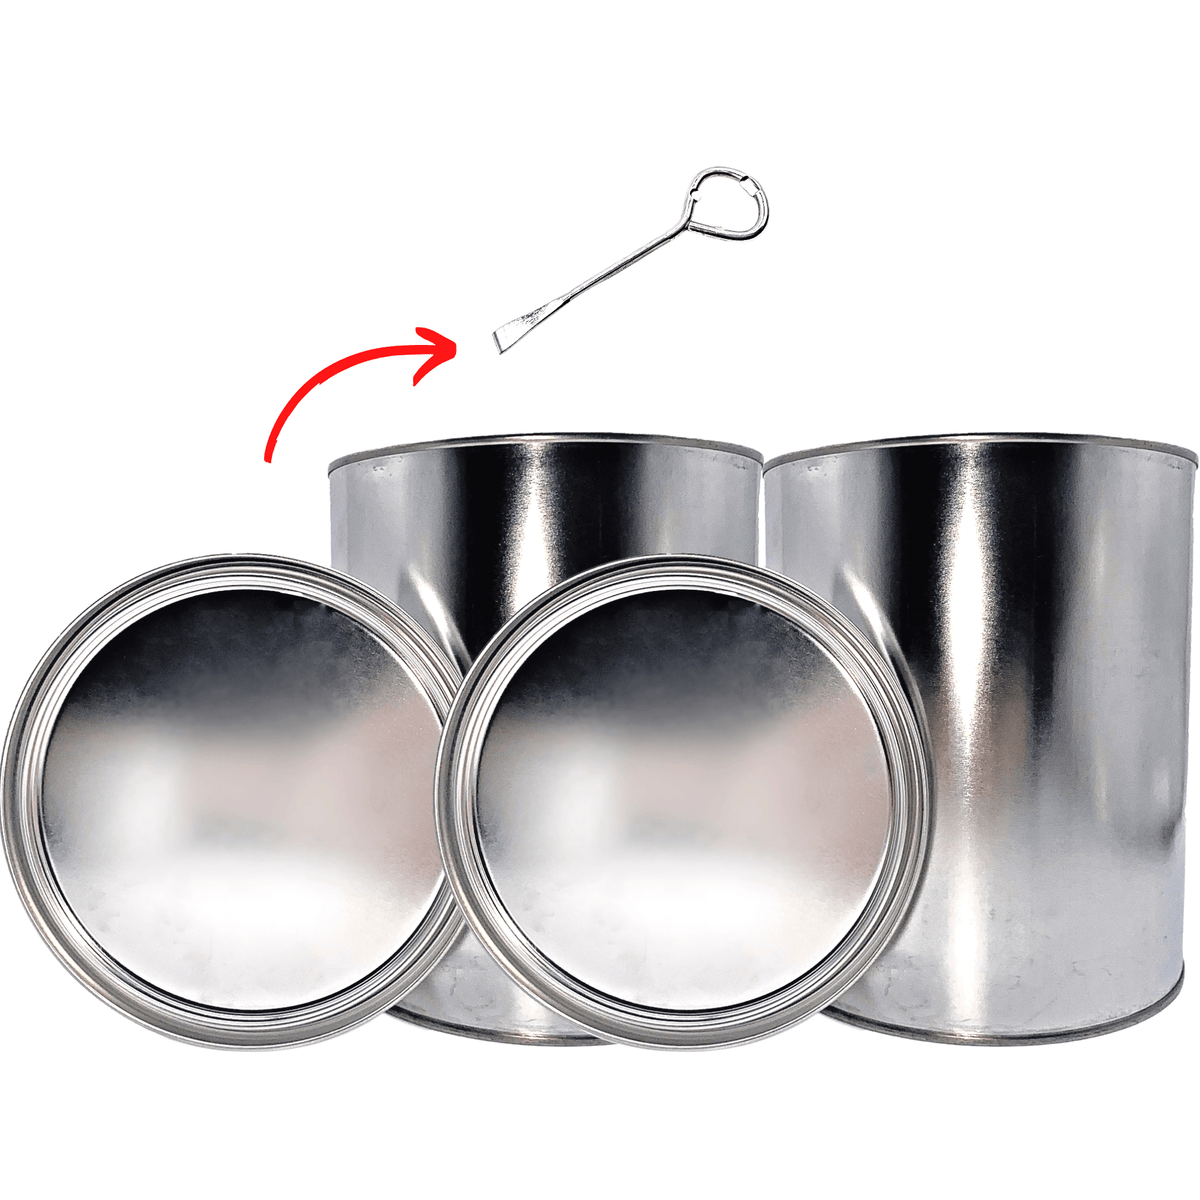 Blysk Empty Metal Copper Primer coted Quart Cans with lids, Craft Stor